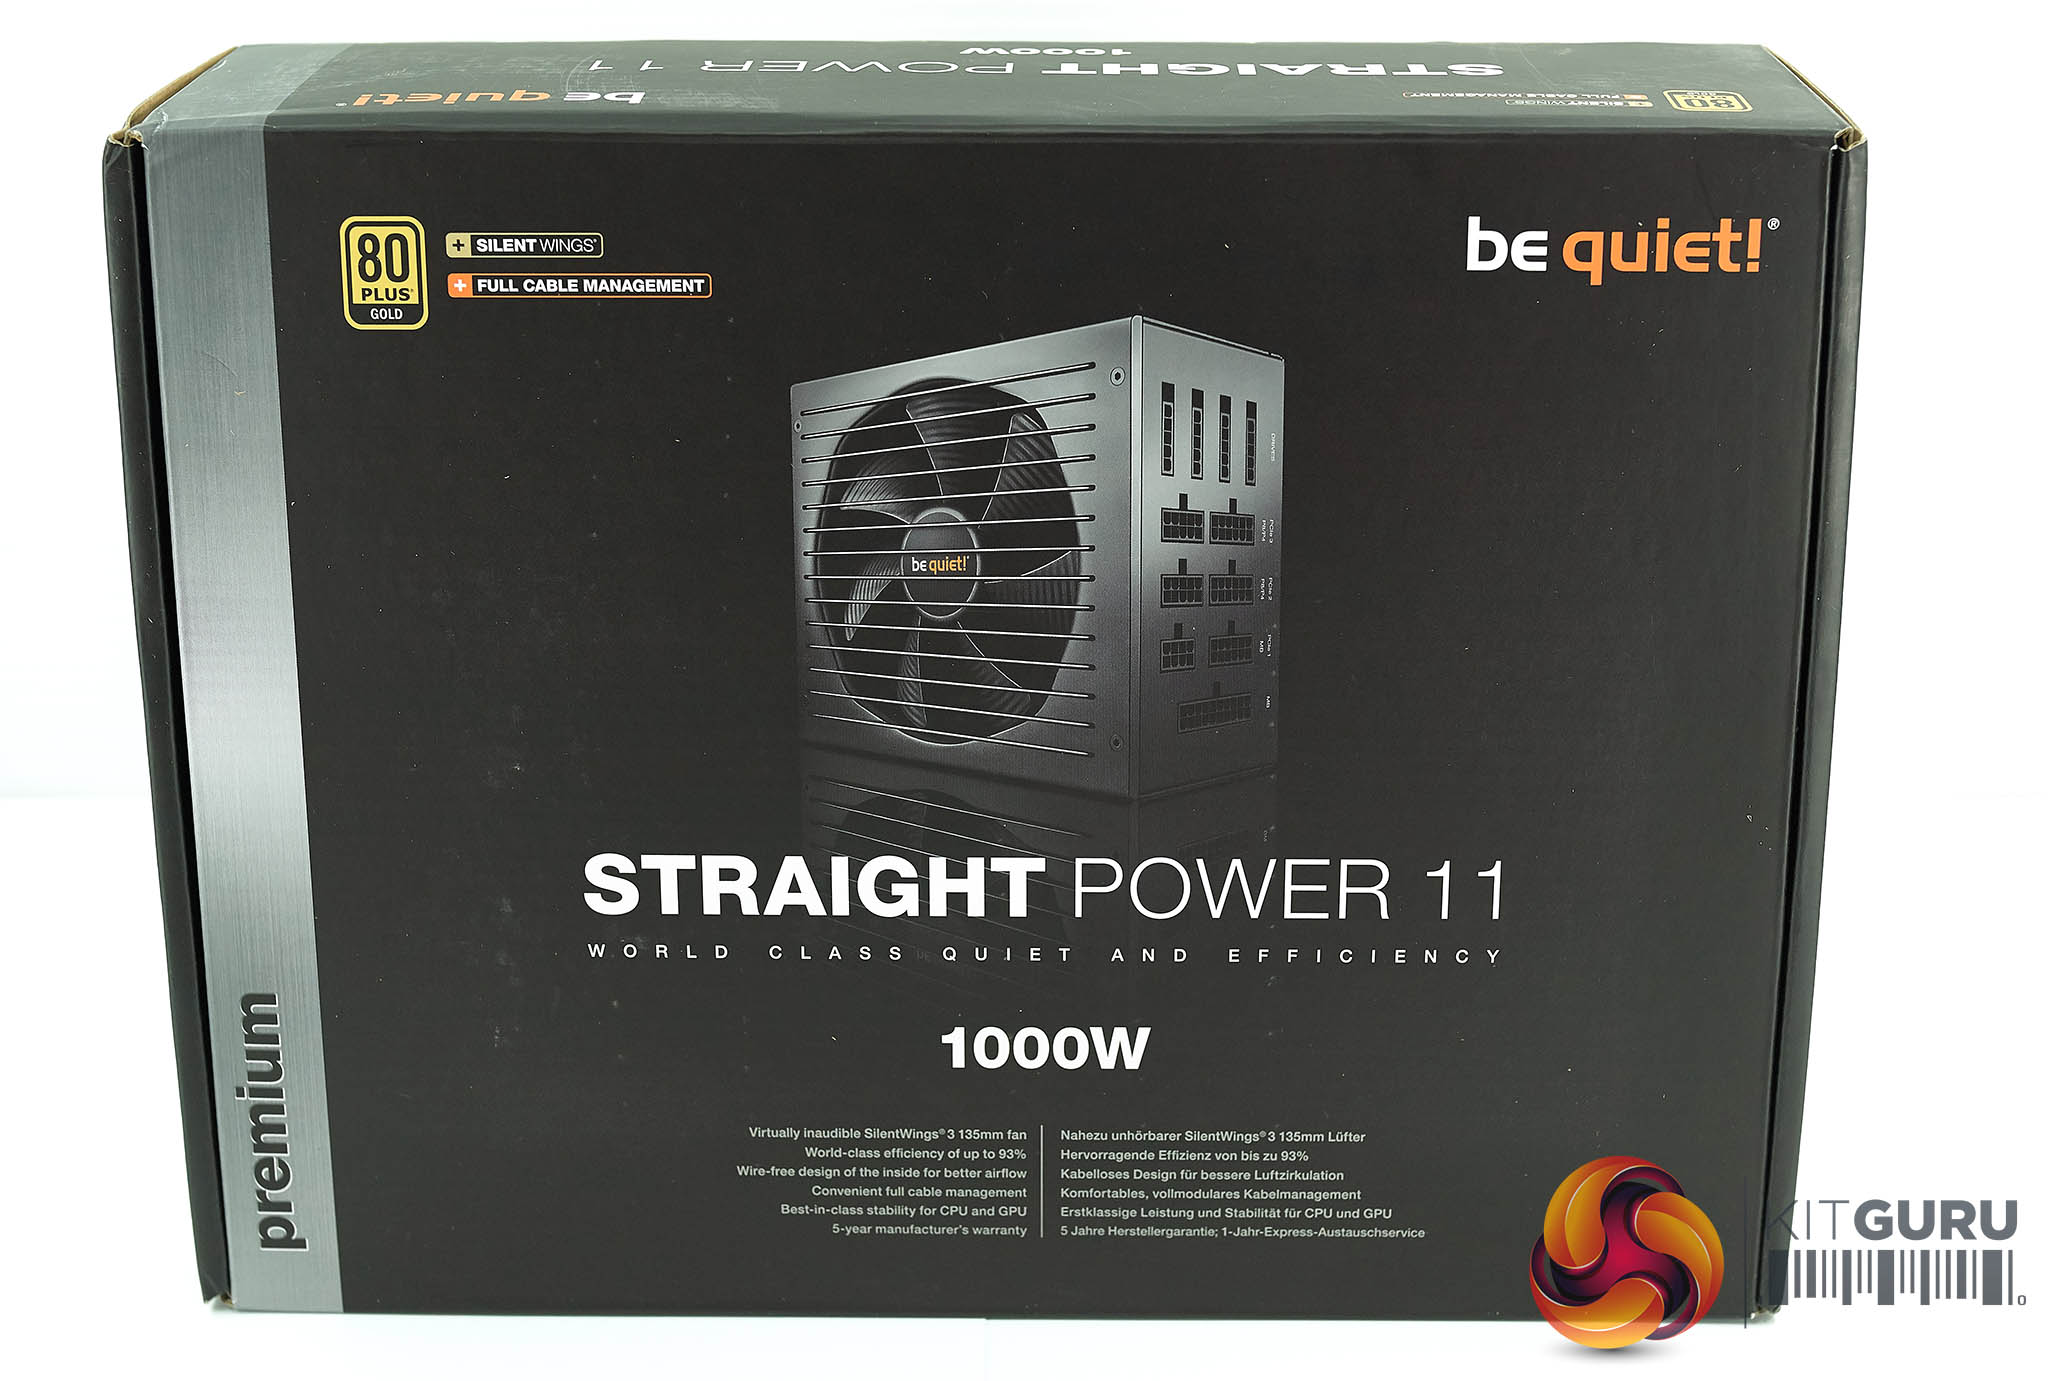 be quiet! Straight Power 11 1000W Power Supply Review | KitGuru